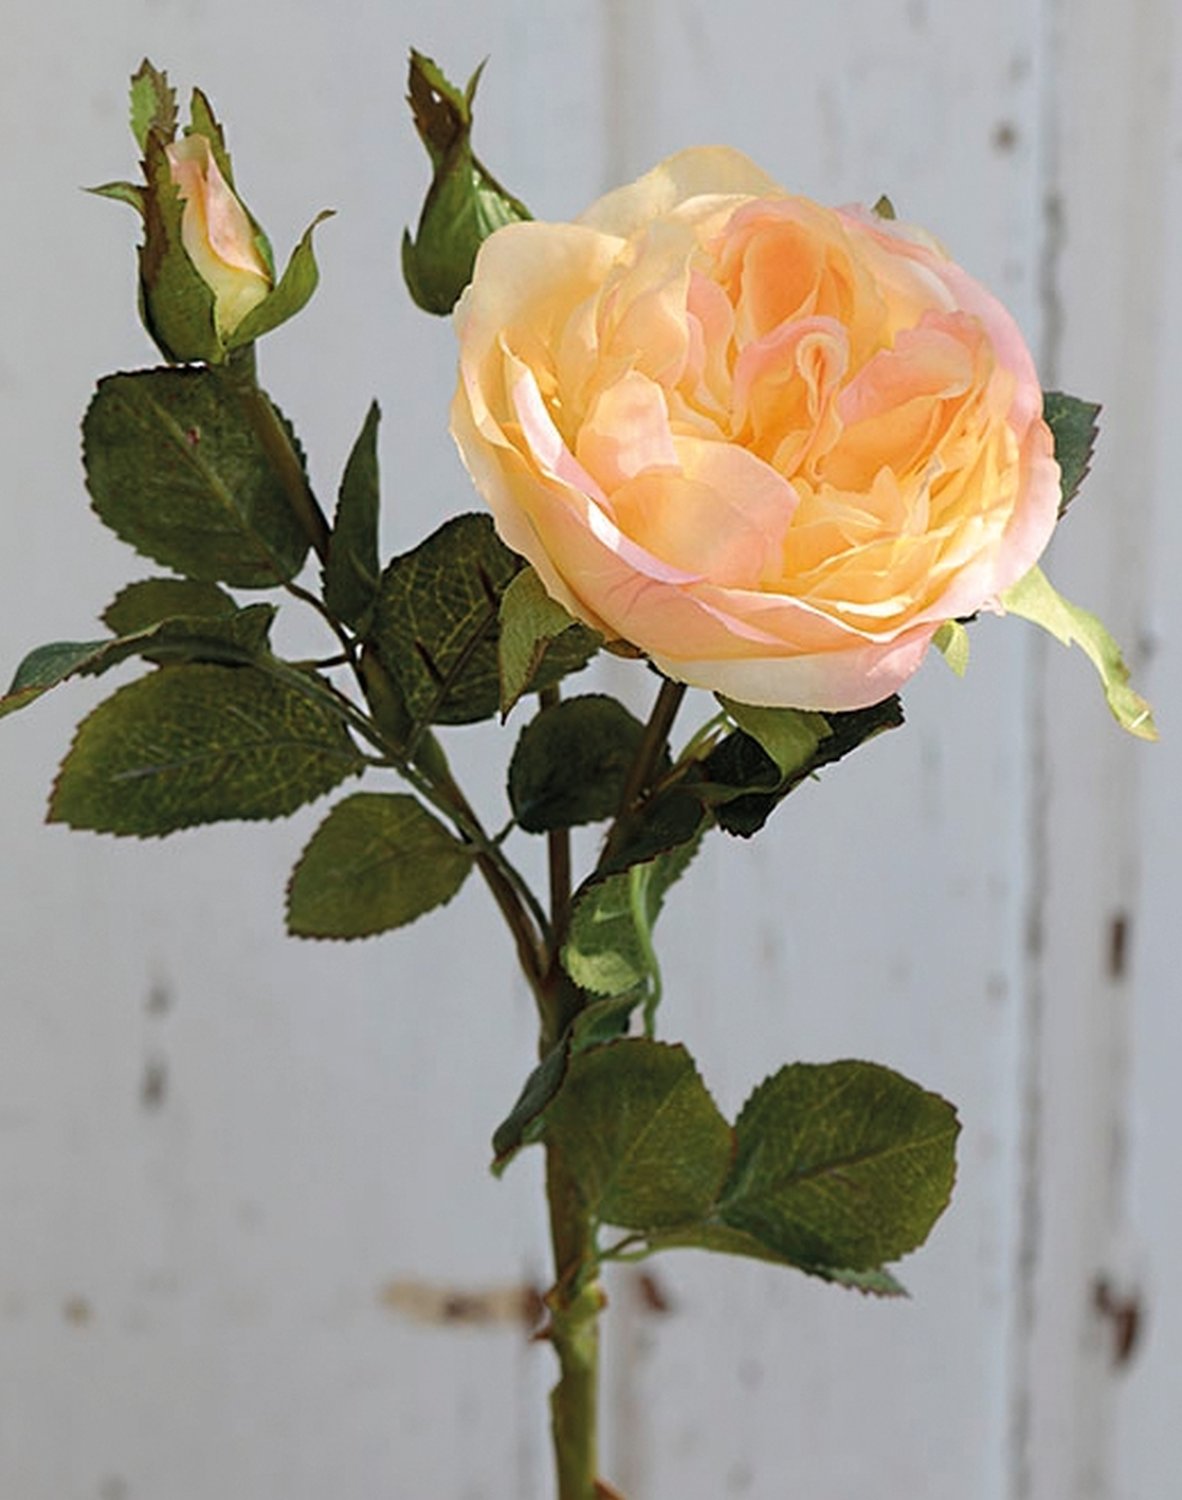 False rose, 1 flower, 2 buds, 30 cm, apricot